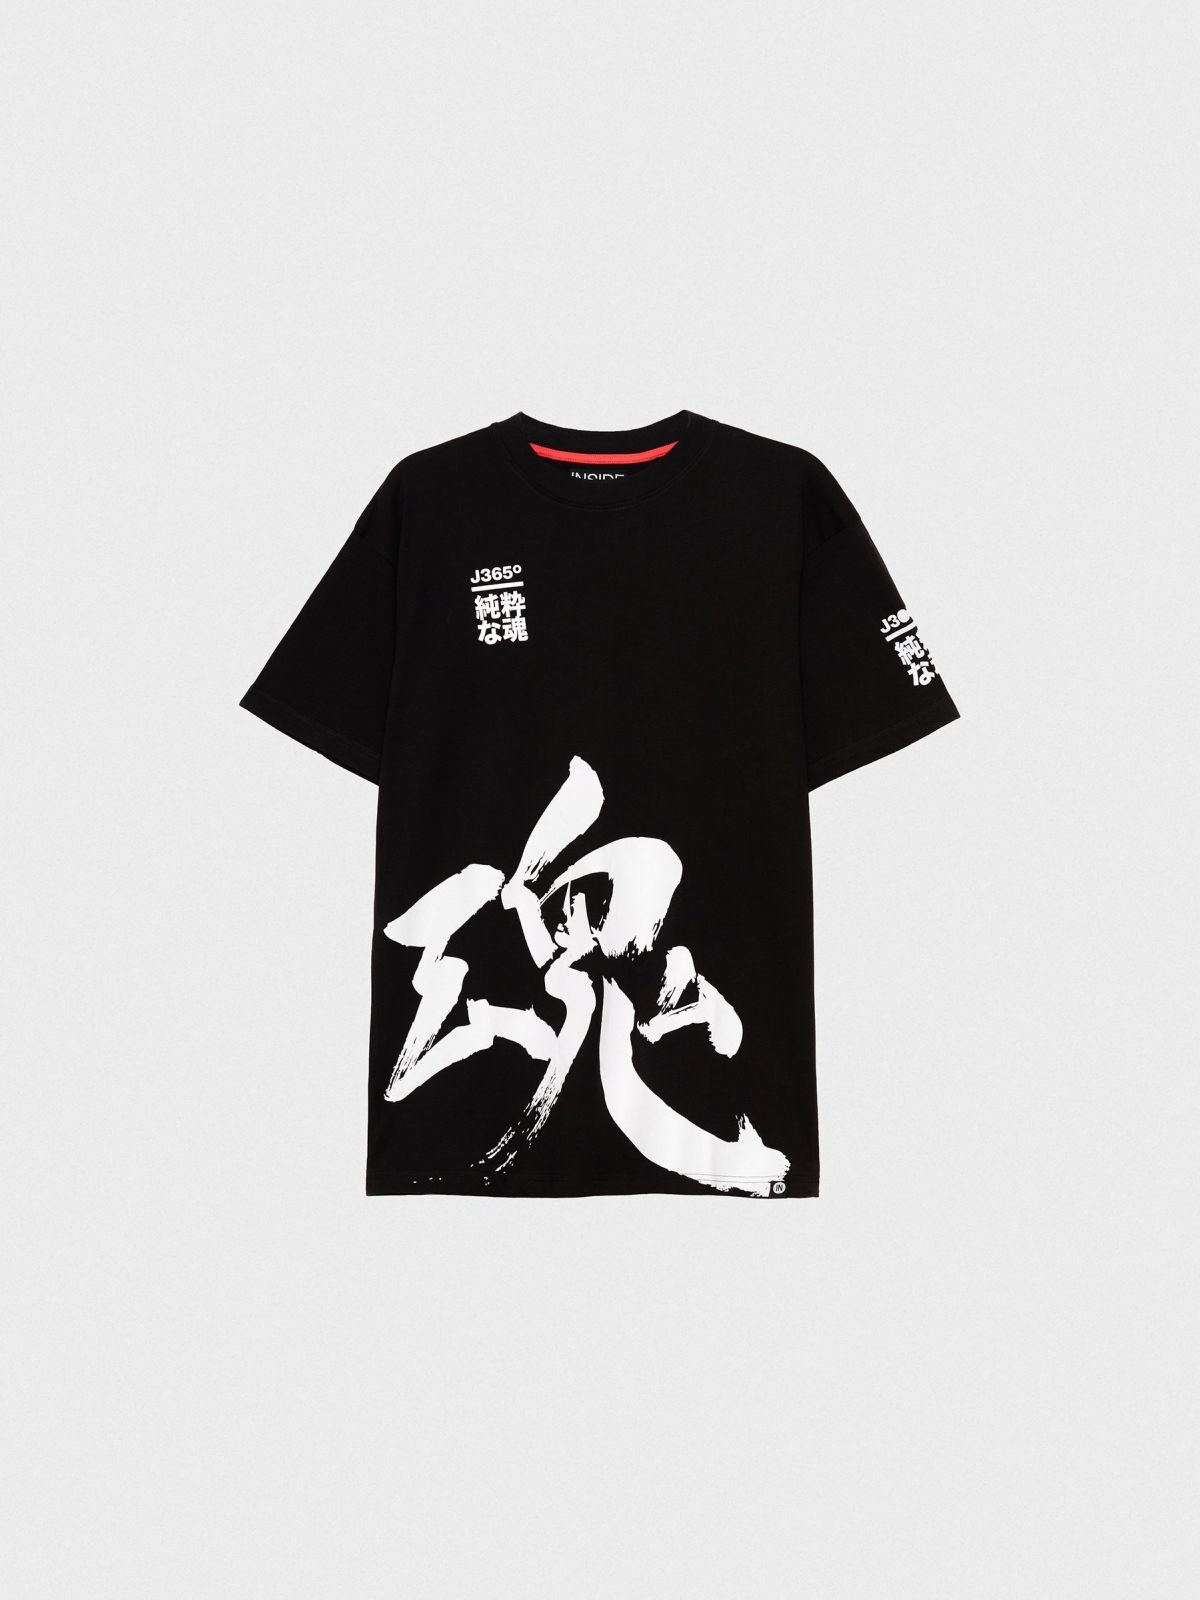  T-shirt com letra japonesa preto